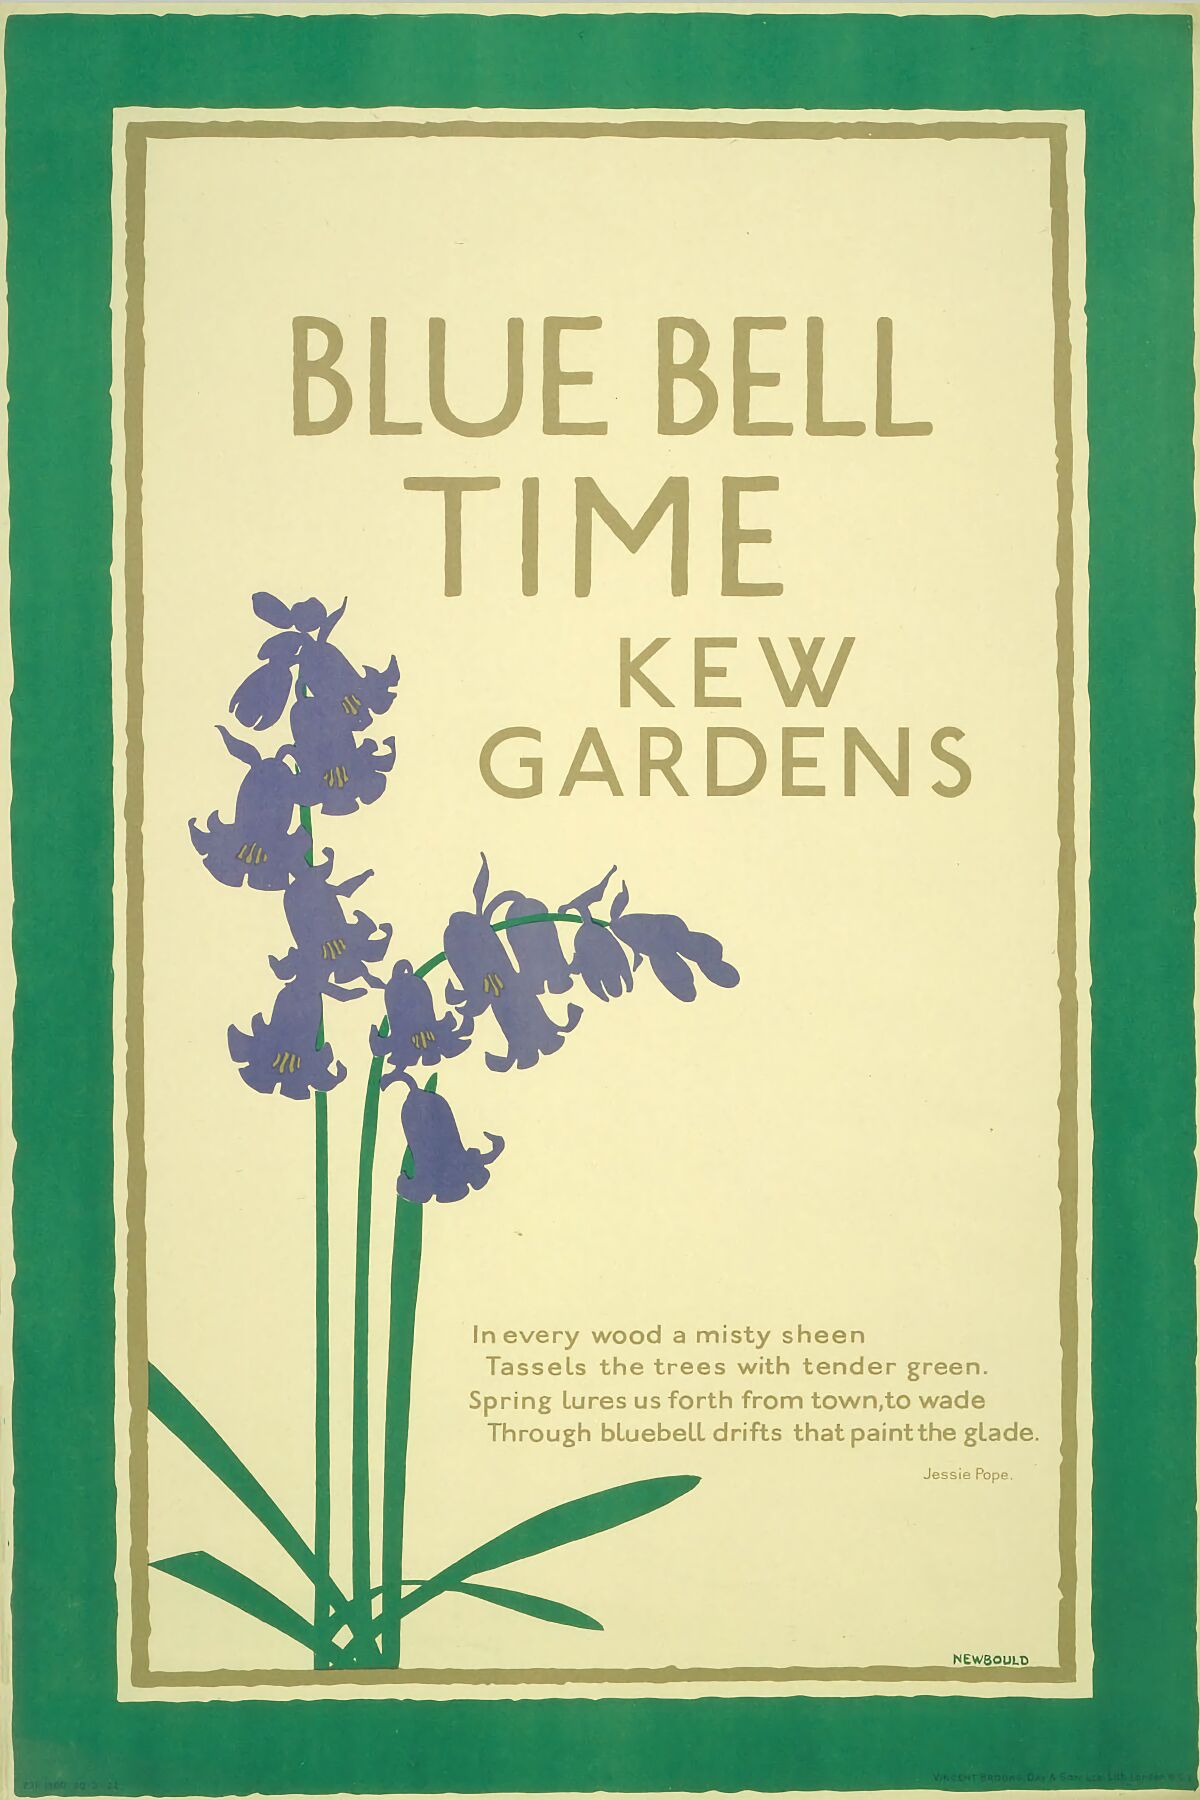 Blue Bell Time Kew Gardens by Frank Newbould - 1922